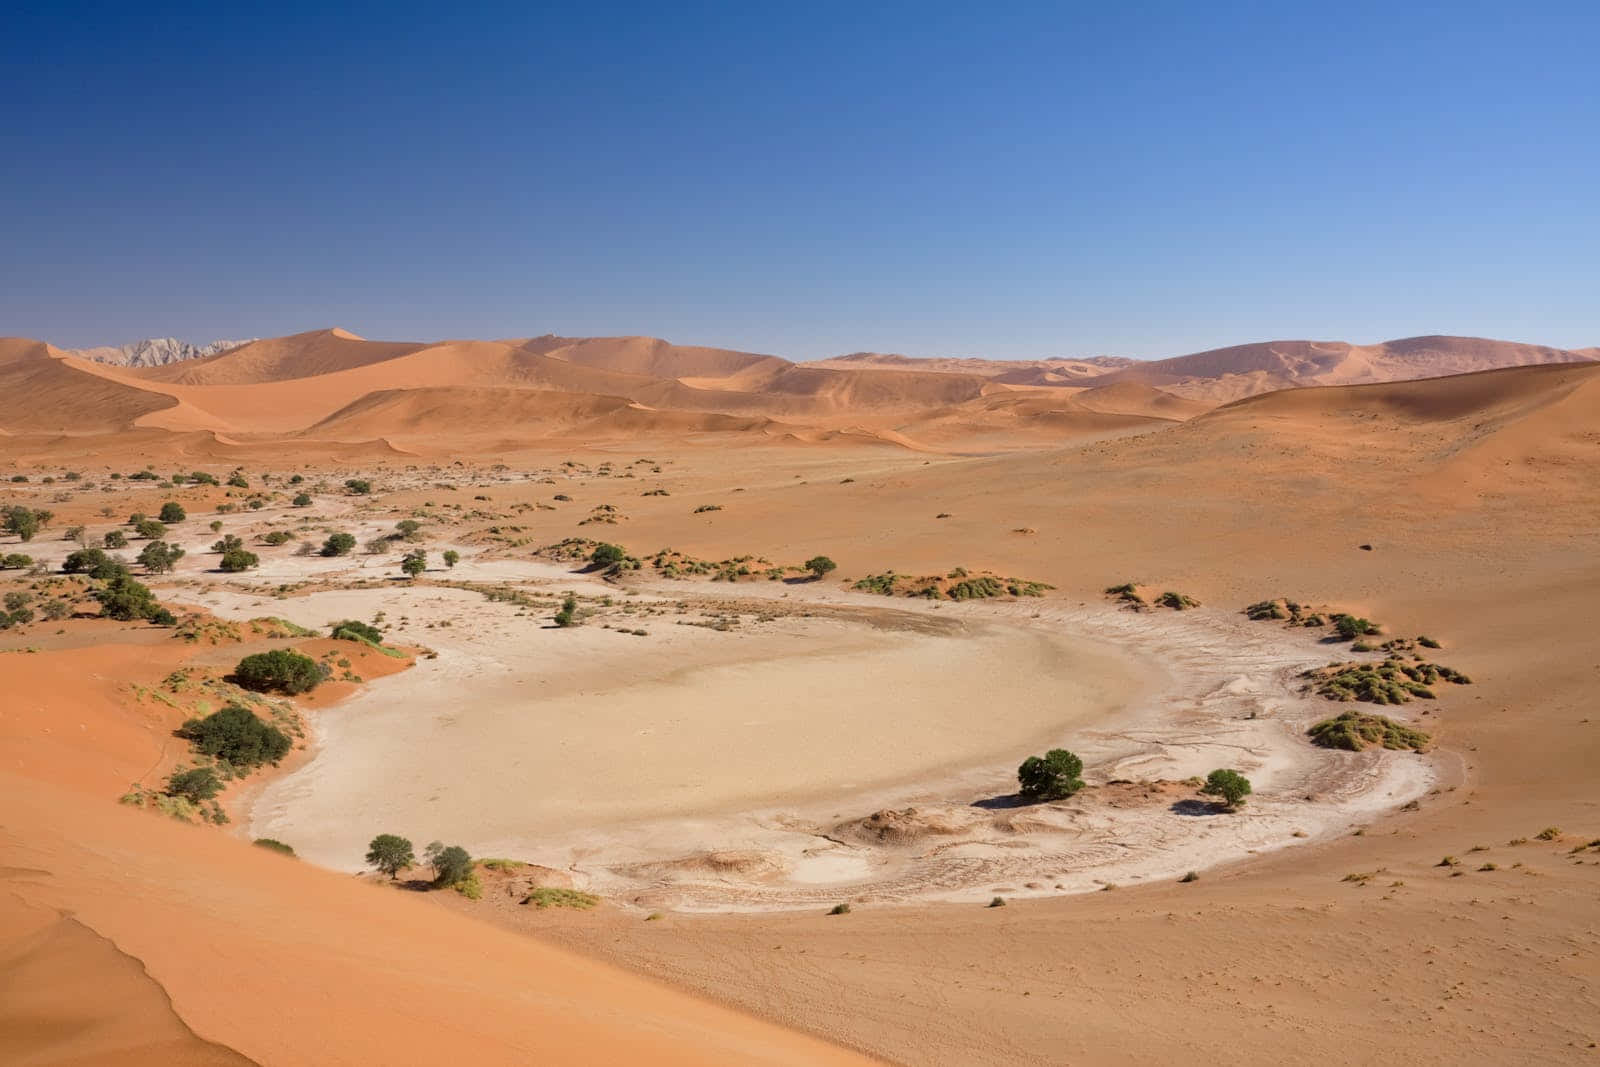 Take a magical journey through the stunning desert